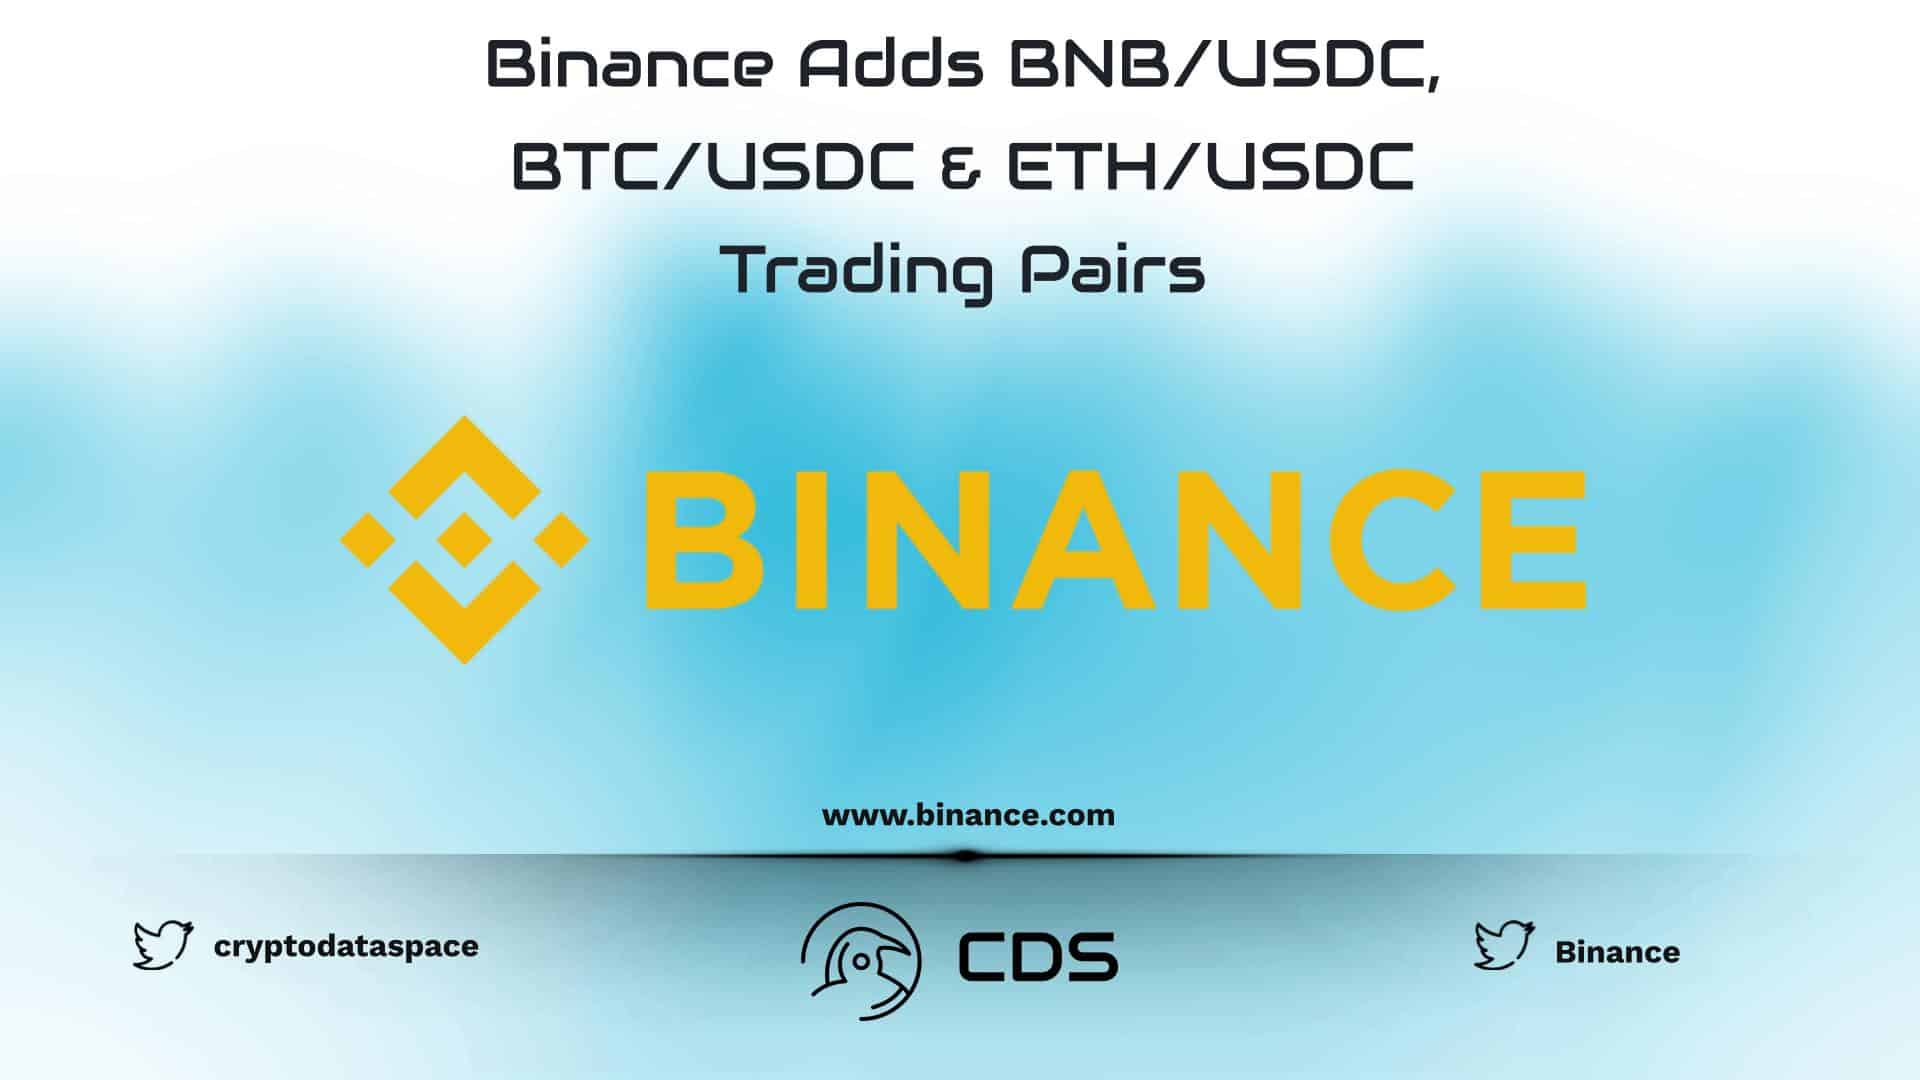 Binance Adds BNB/USDC, BTC/USDC & ETH/USDC Trading Pairs